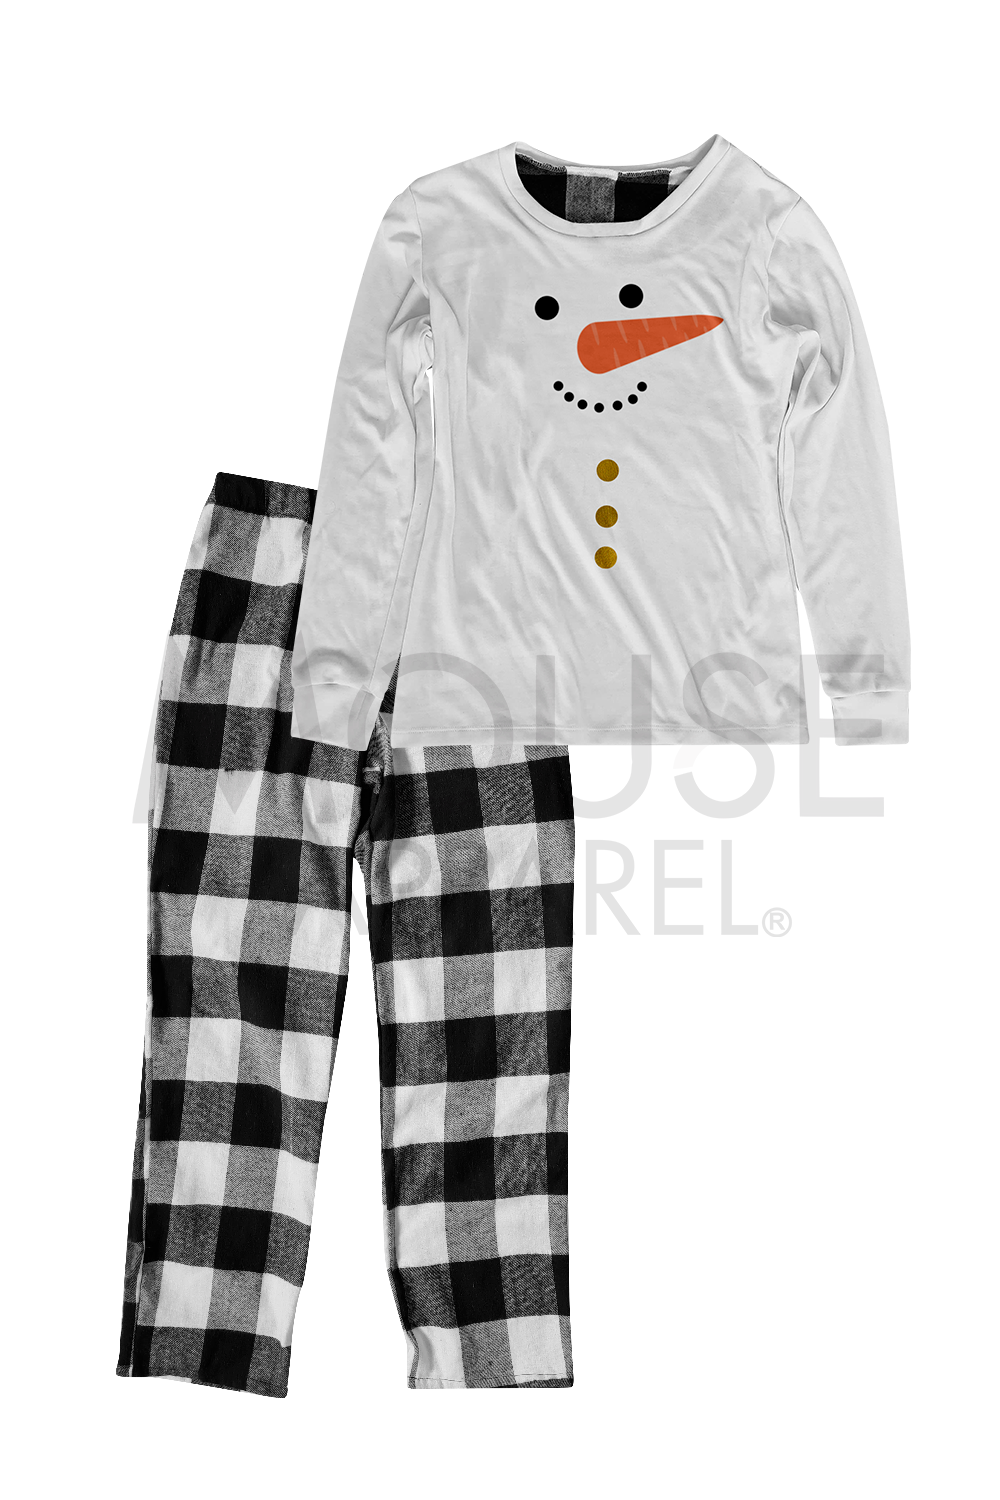 pijama muñeco de nieve